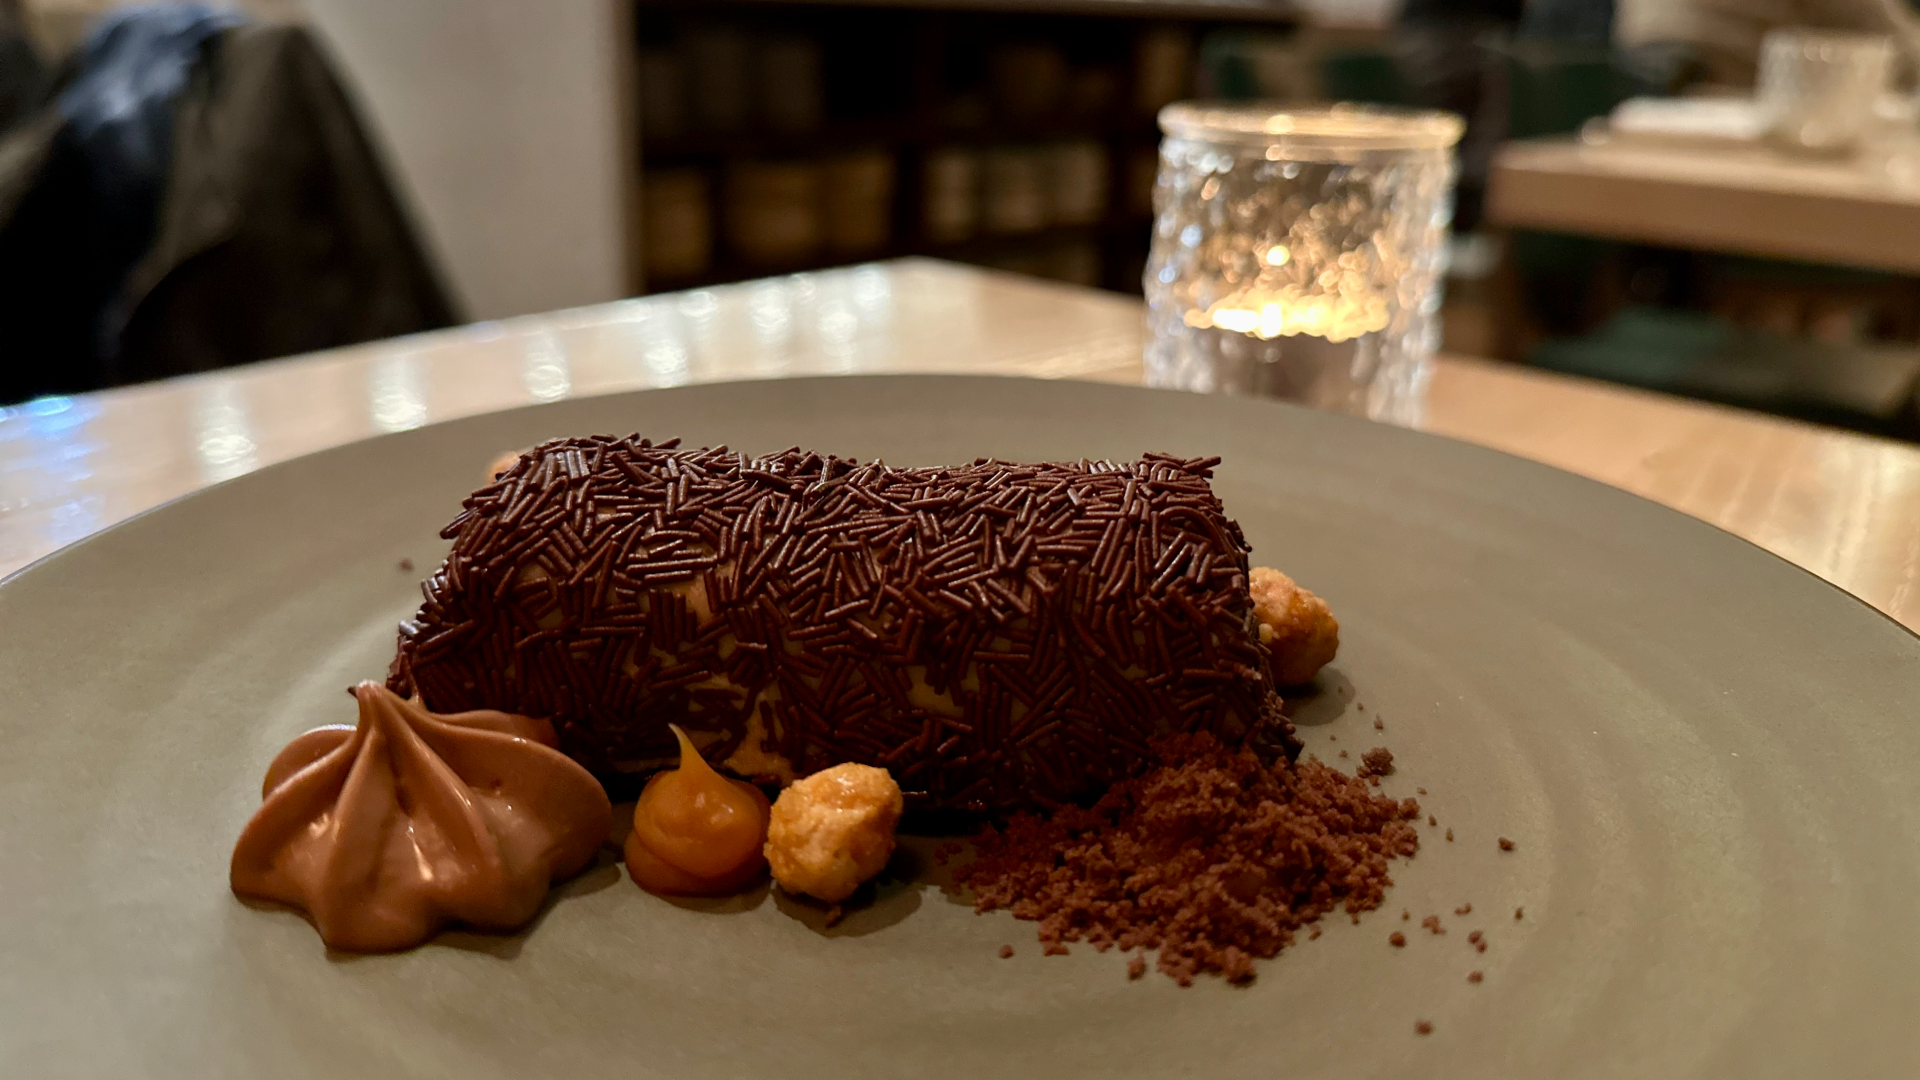 A photo of a chocolate dessert